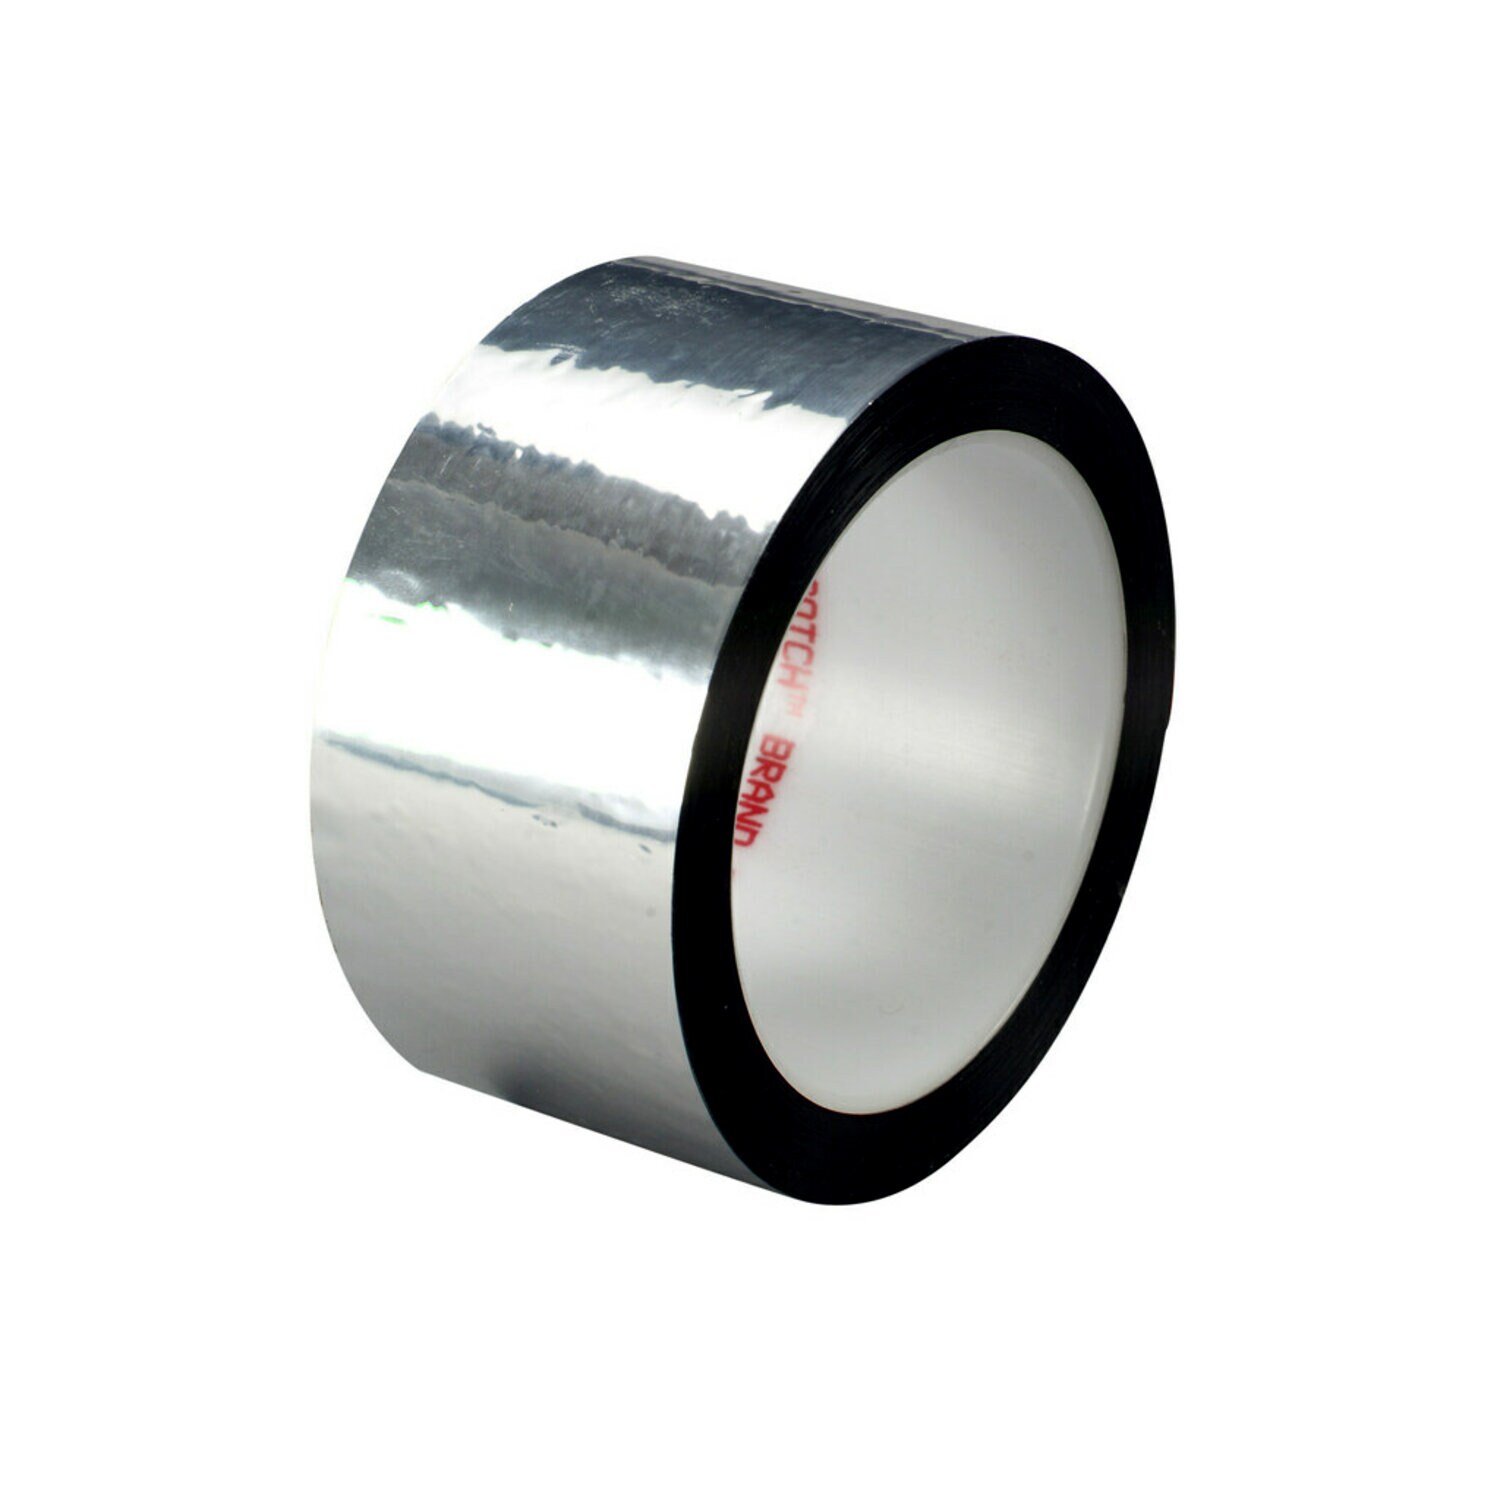 7010048669 - 3M Polyester Film Tape 850, Silver, 1/4 in x 72 yd, 1.9 mil, 144 rolls per case